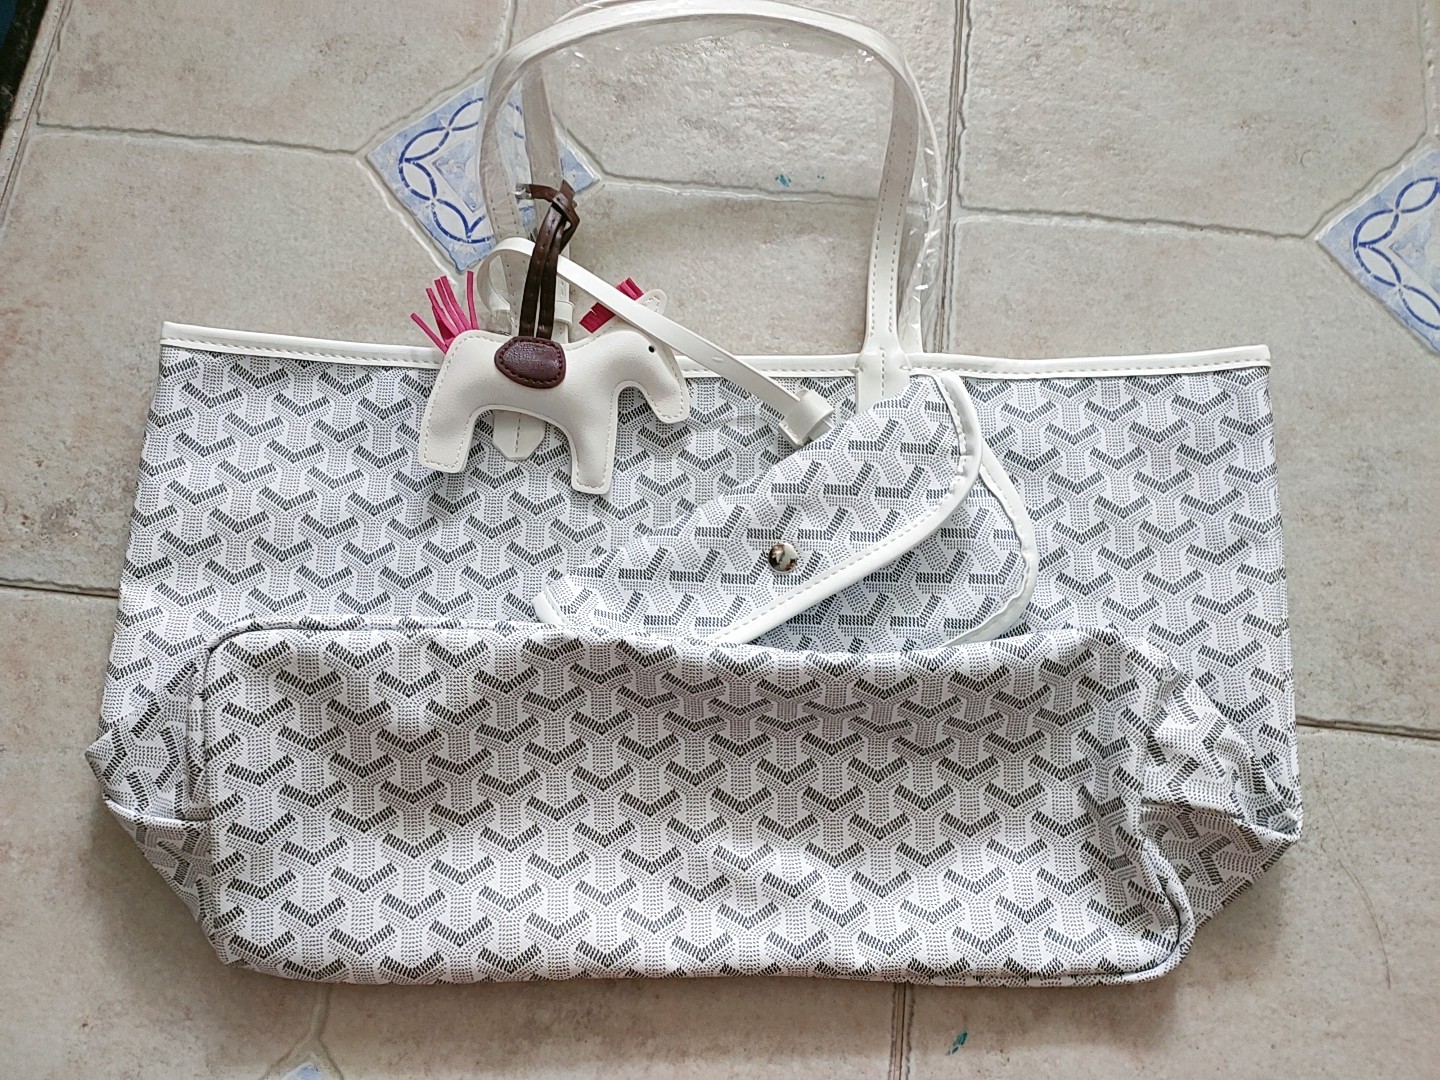 Emo Tote Bag G0y Rd Women S Fashion Bags Wallets Handbags On Carousell